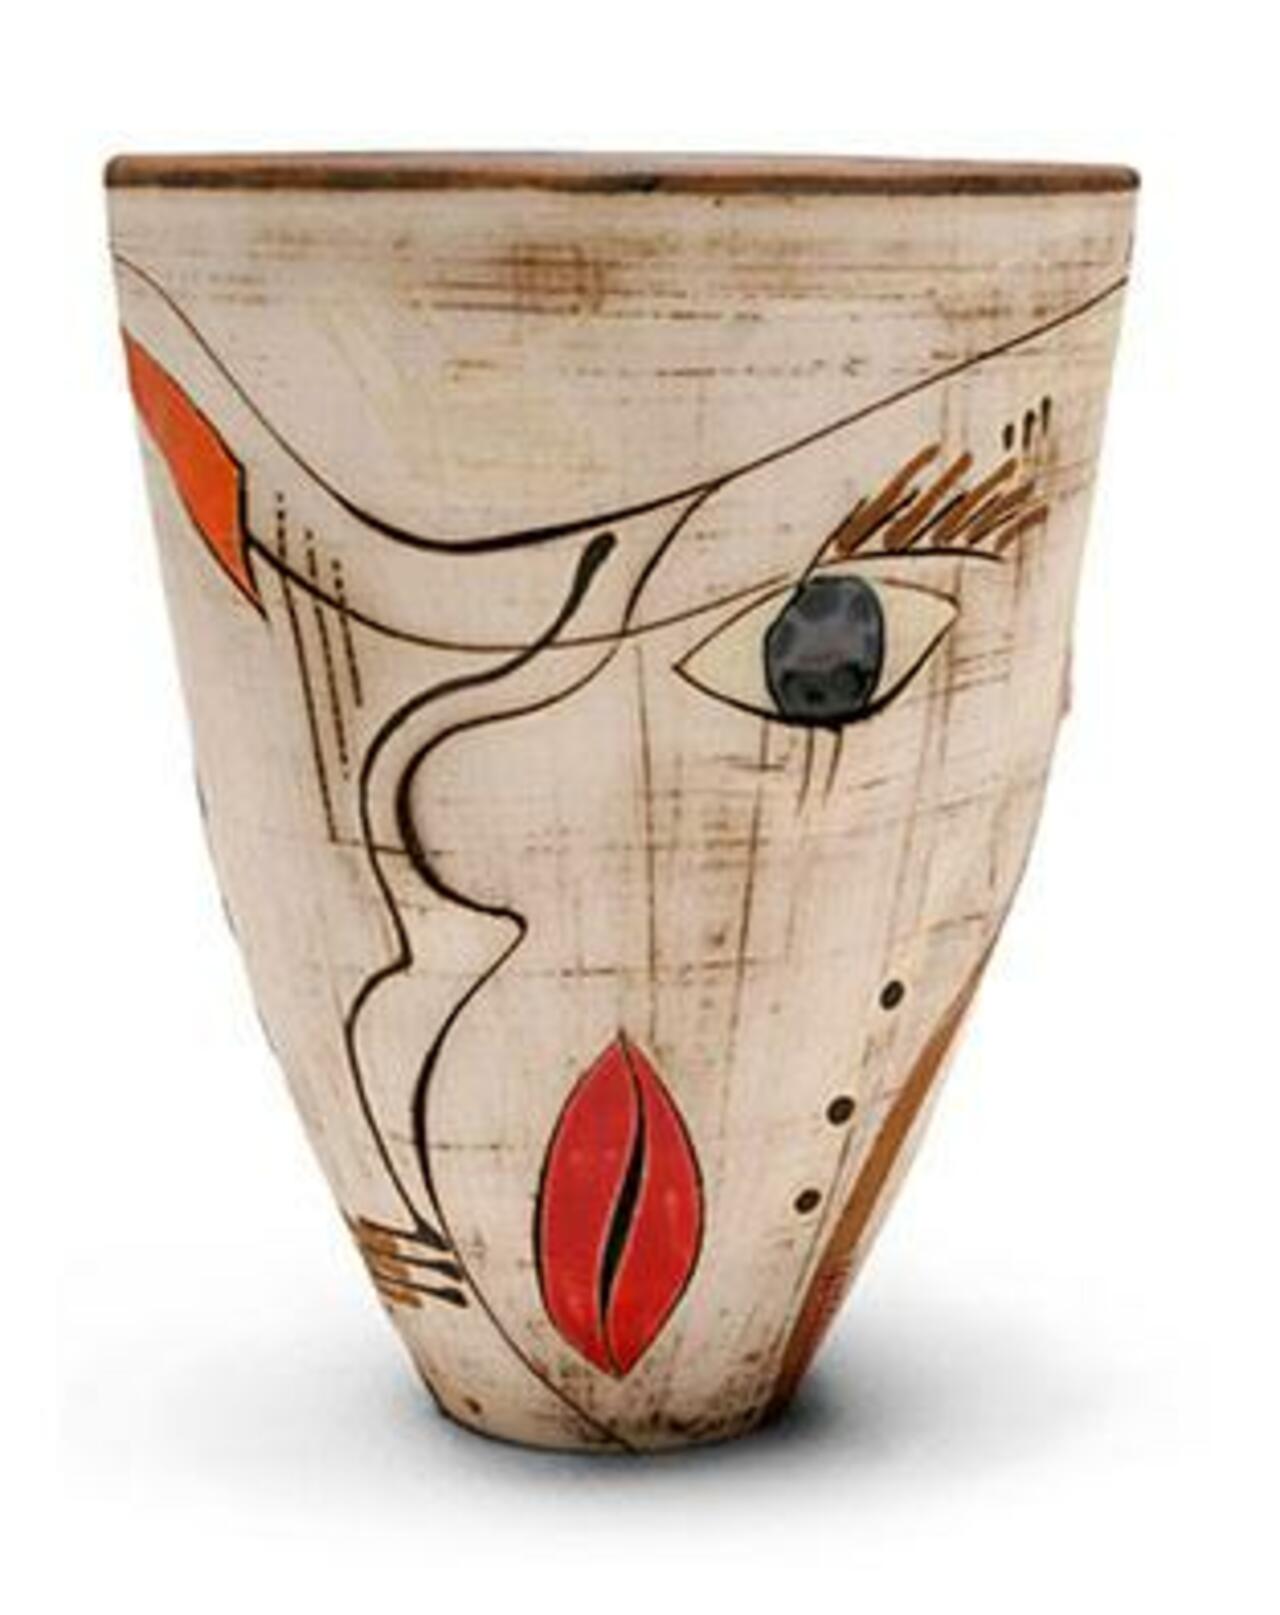 #Ceramics by #Imiso ceramics #Southafrica #africa http://www.imisoceramics.co.za/scarified.html http://t.co/NqeYtWrabc